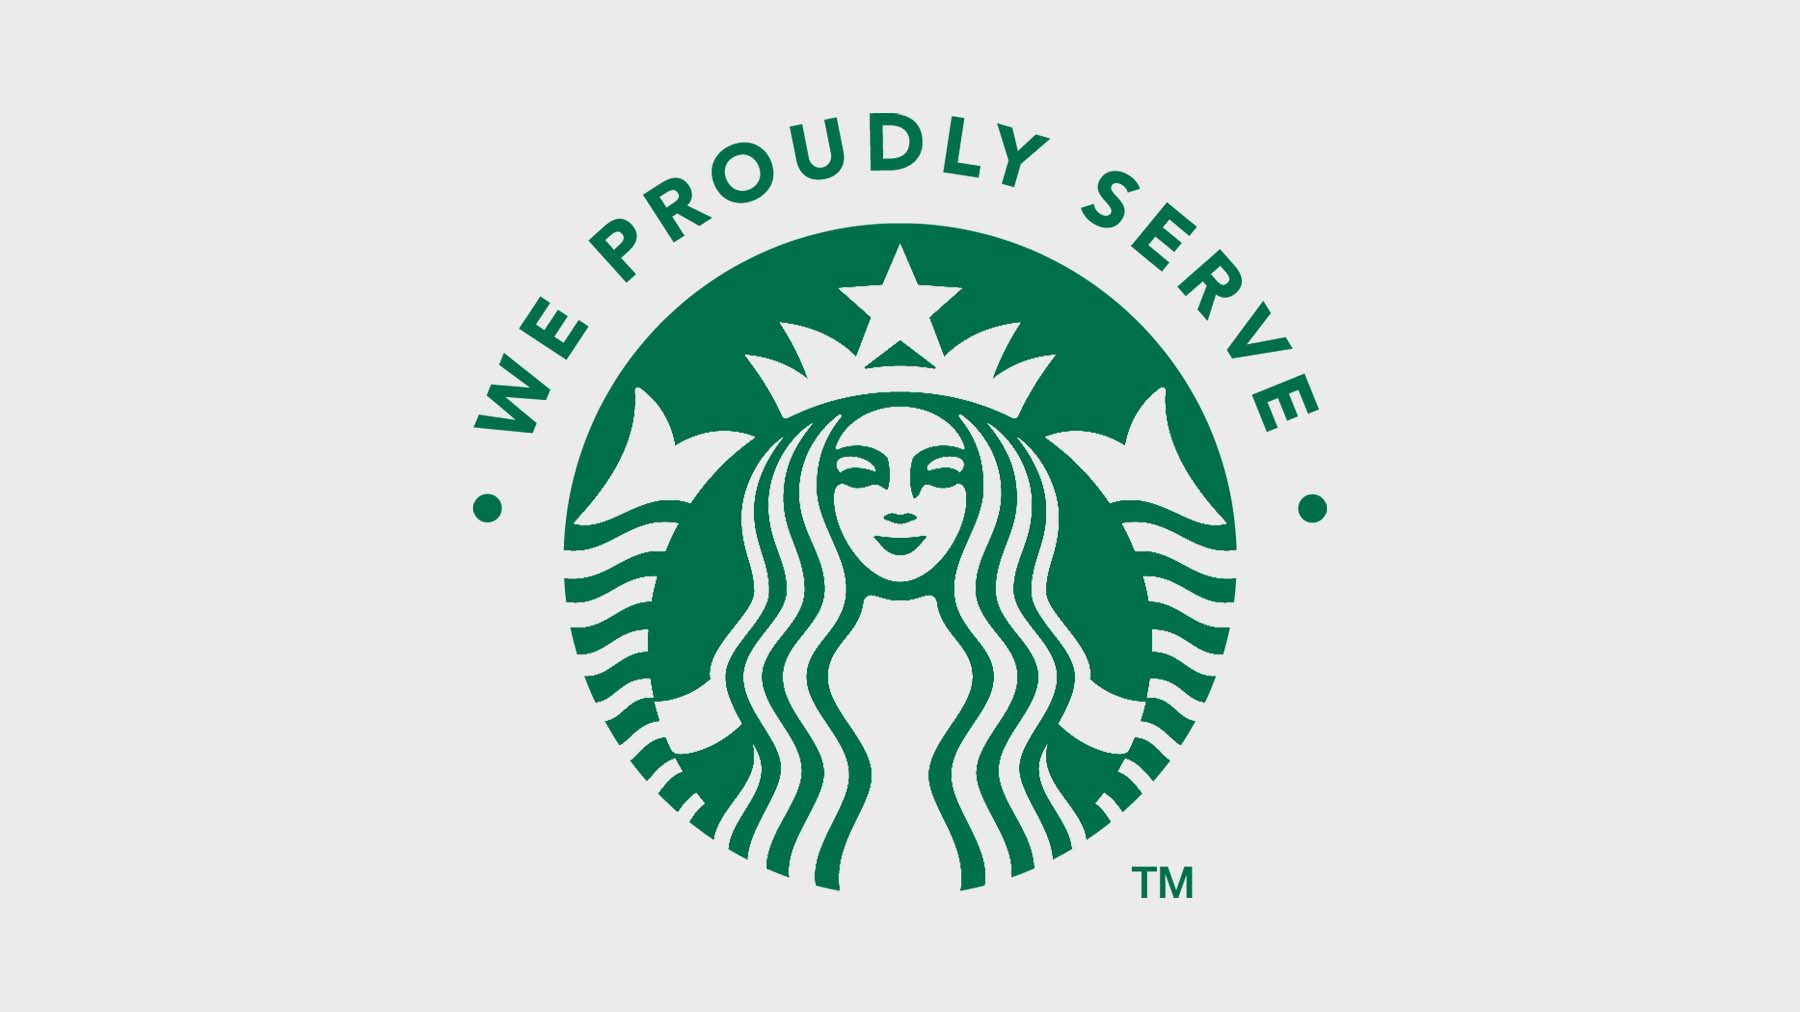 We Proudly Serve Starbucks